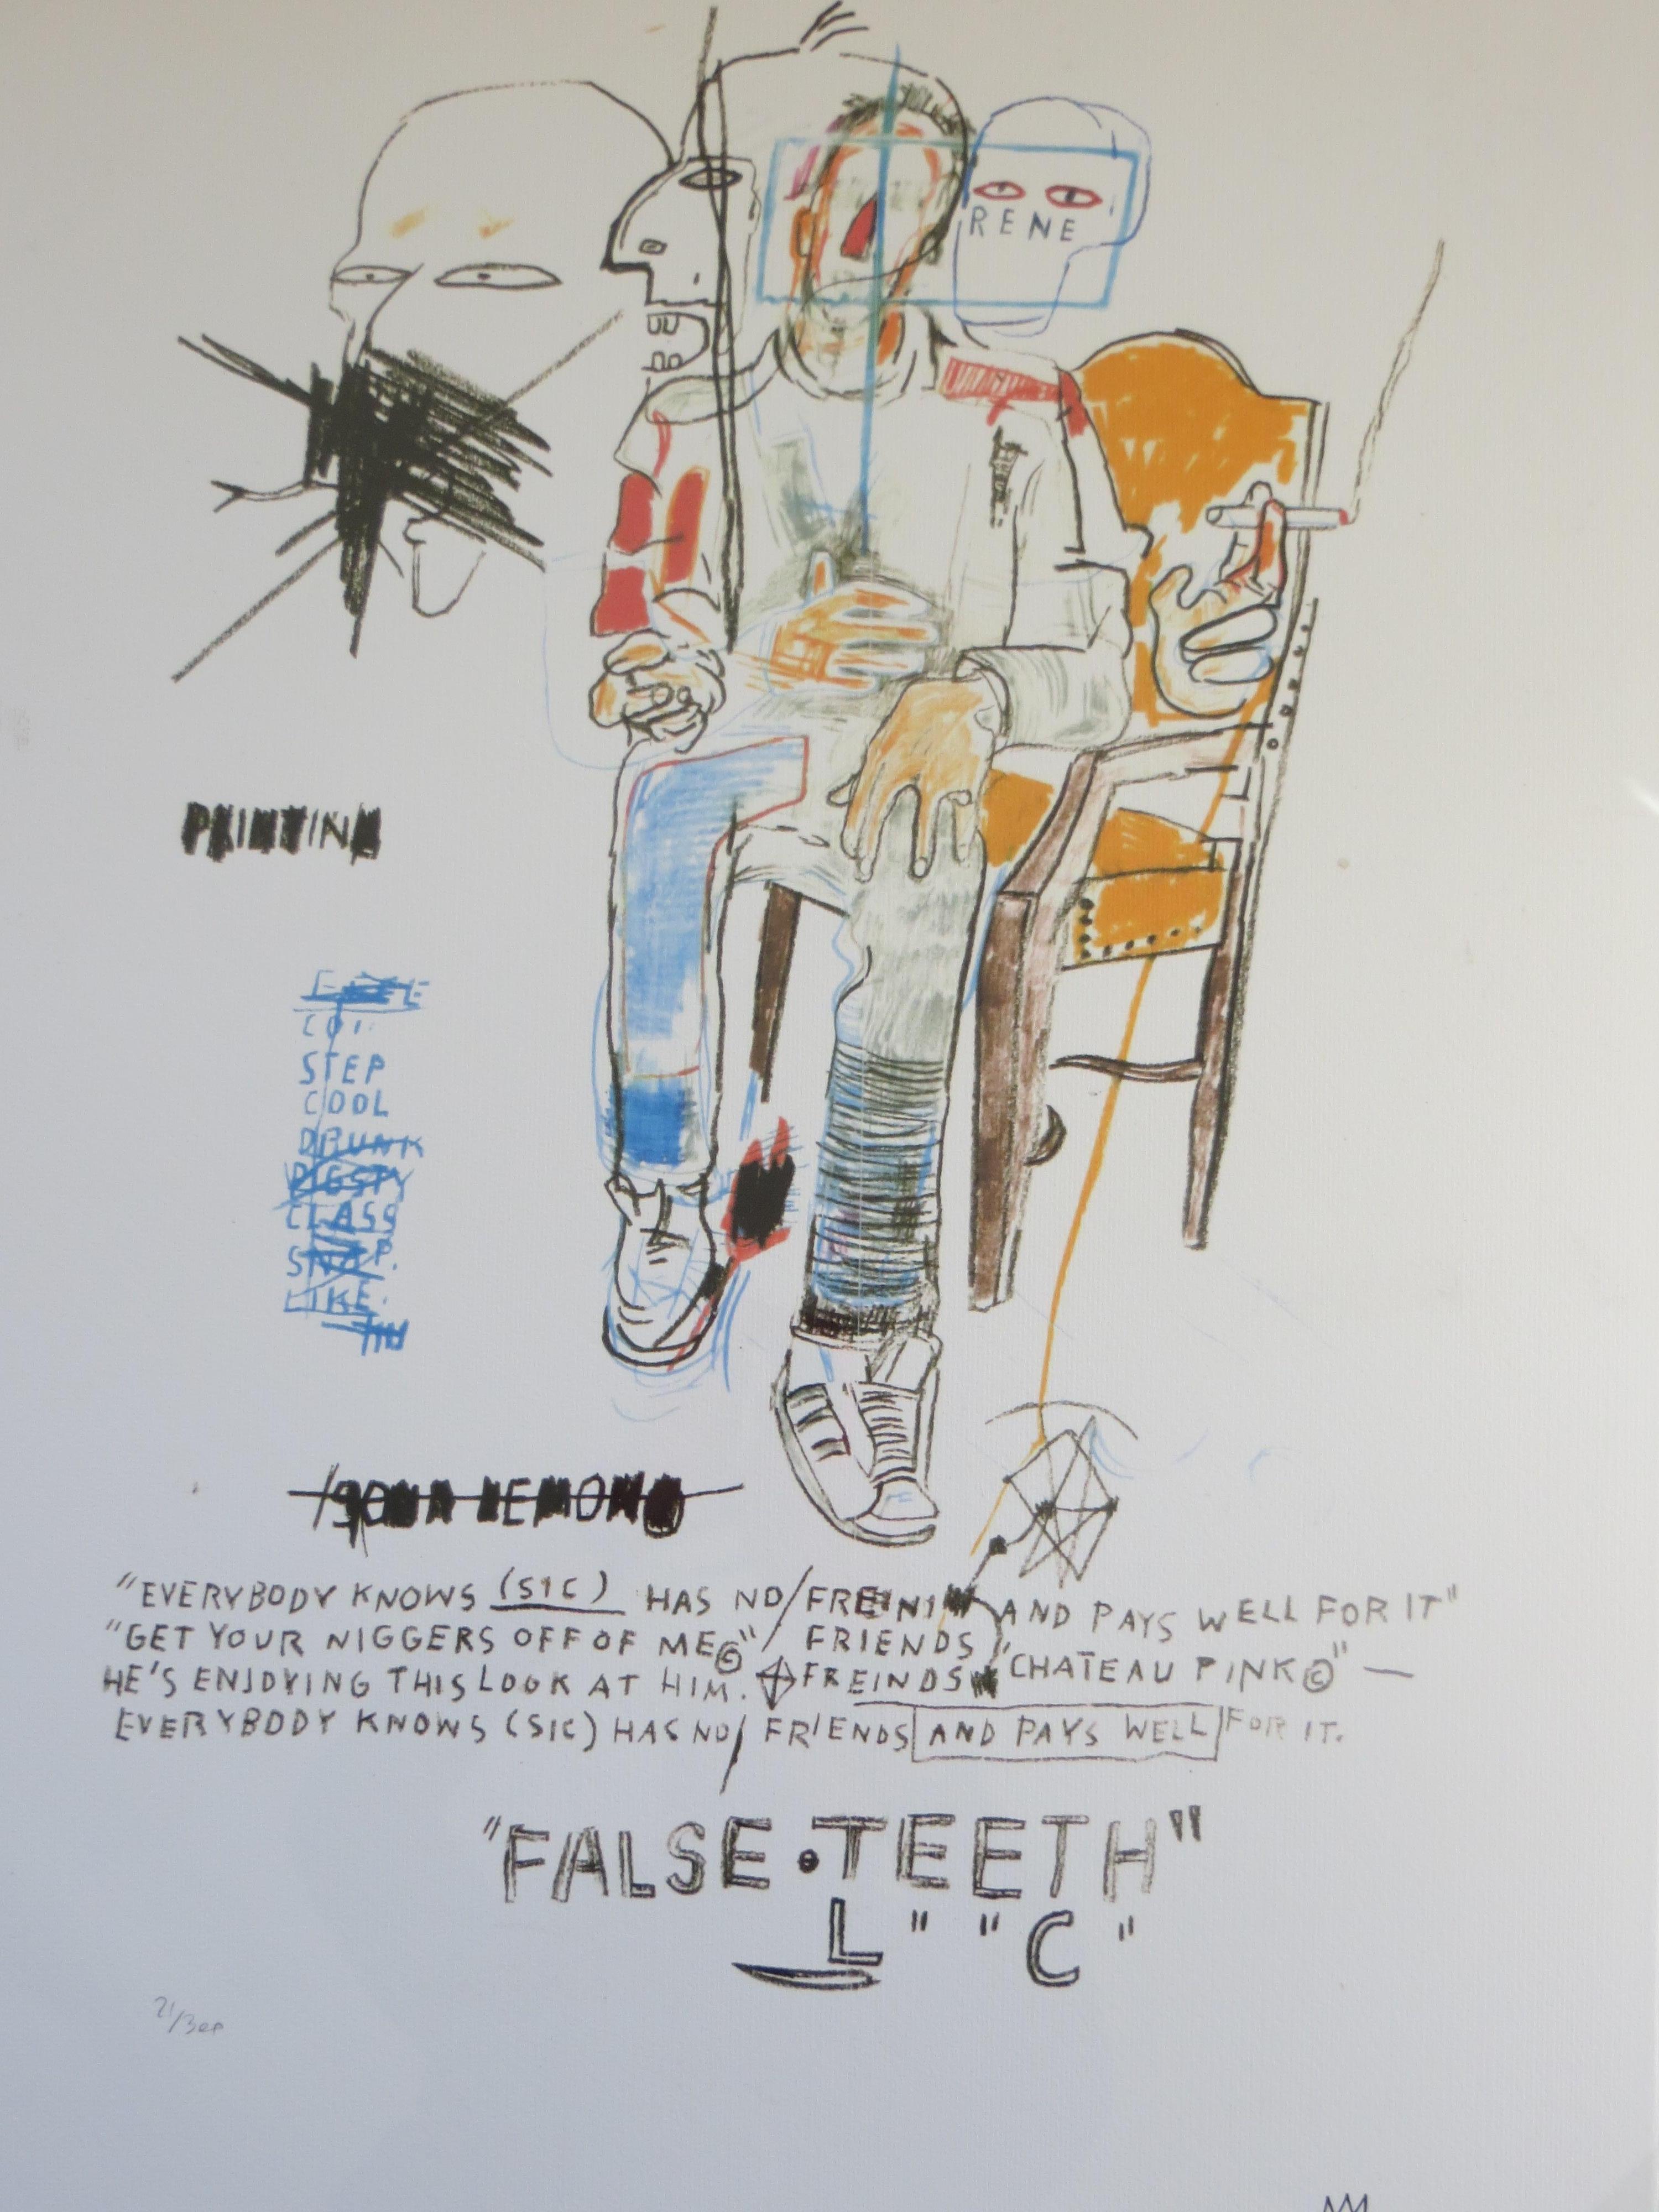 The Estate of Jean-Michel Basquiat "False Teeth" Lithograph N°21/300